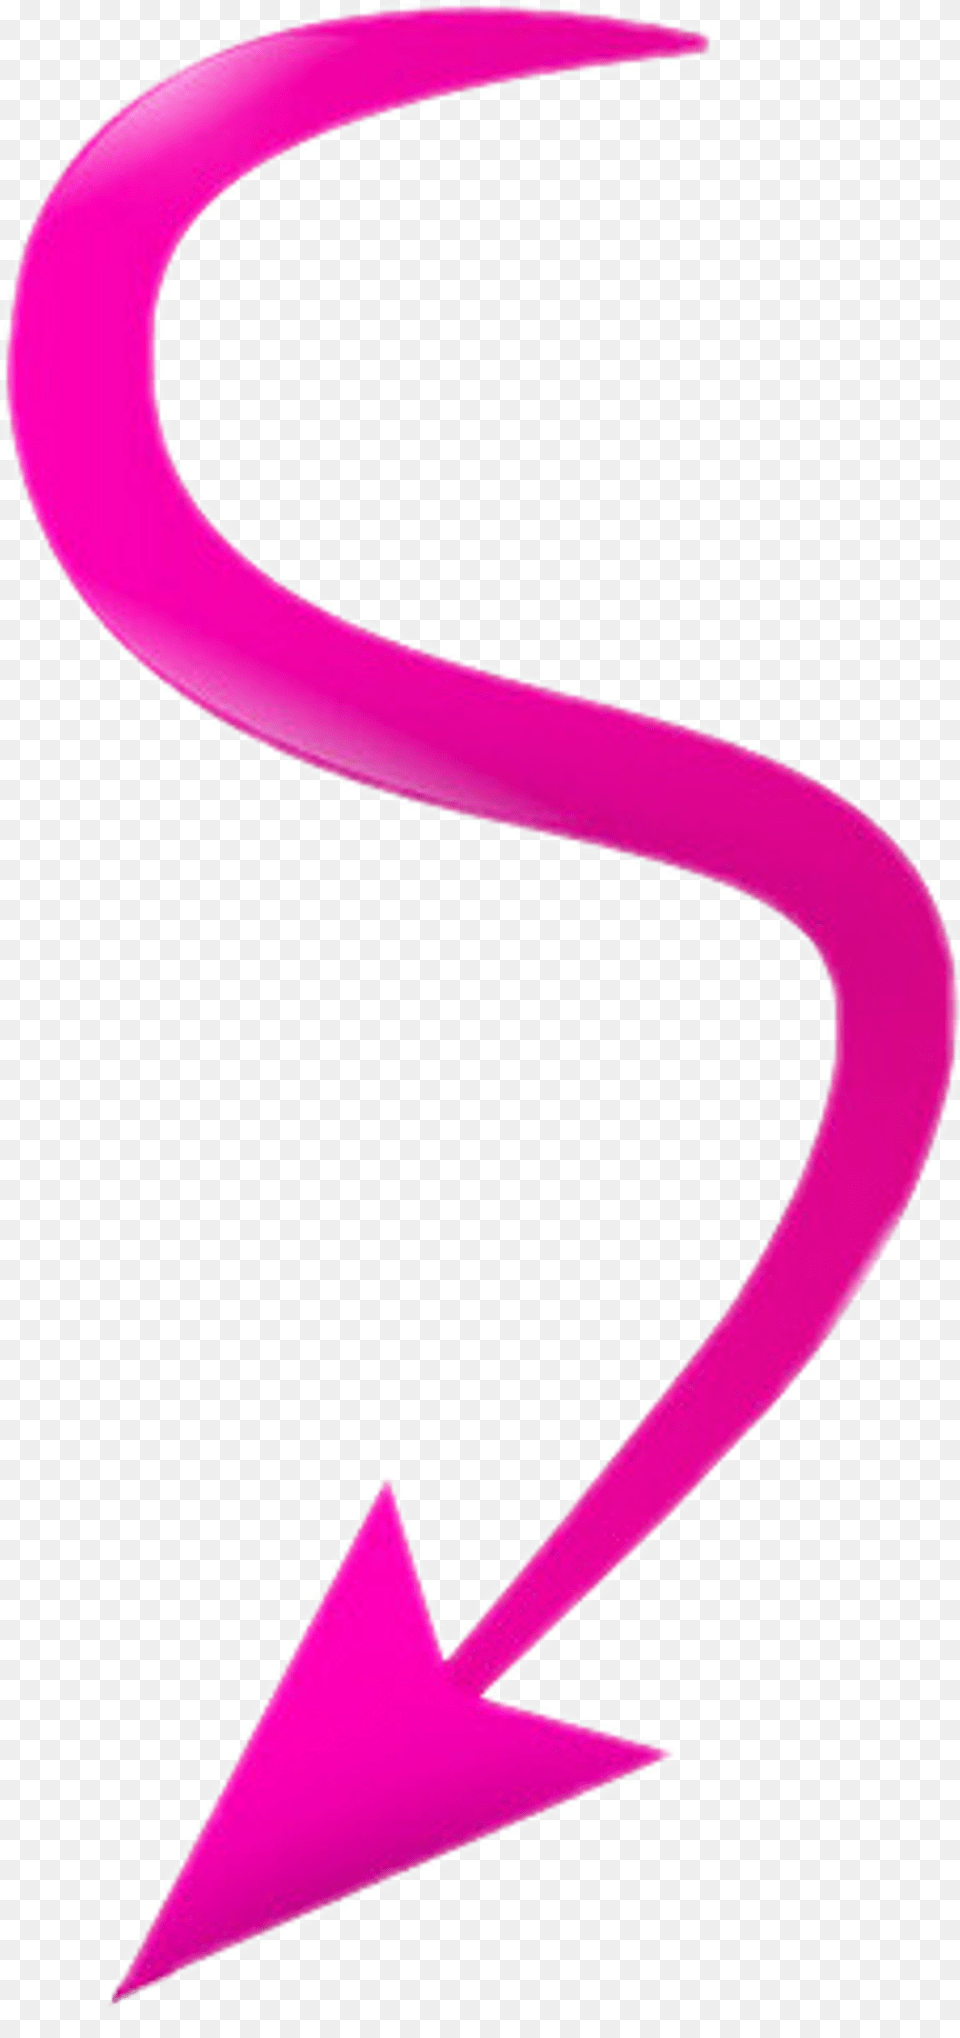 Pink Arrow Swirl Spiral Wave Download, Smoke Pipe Png Image